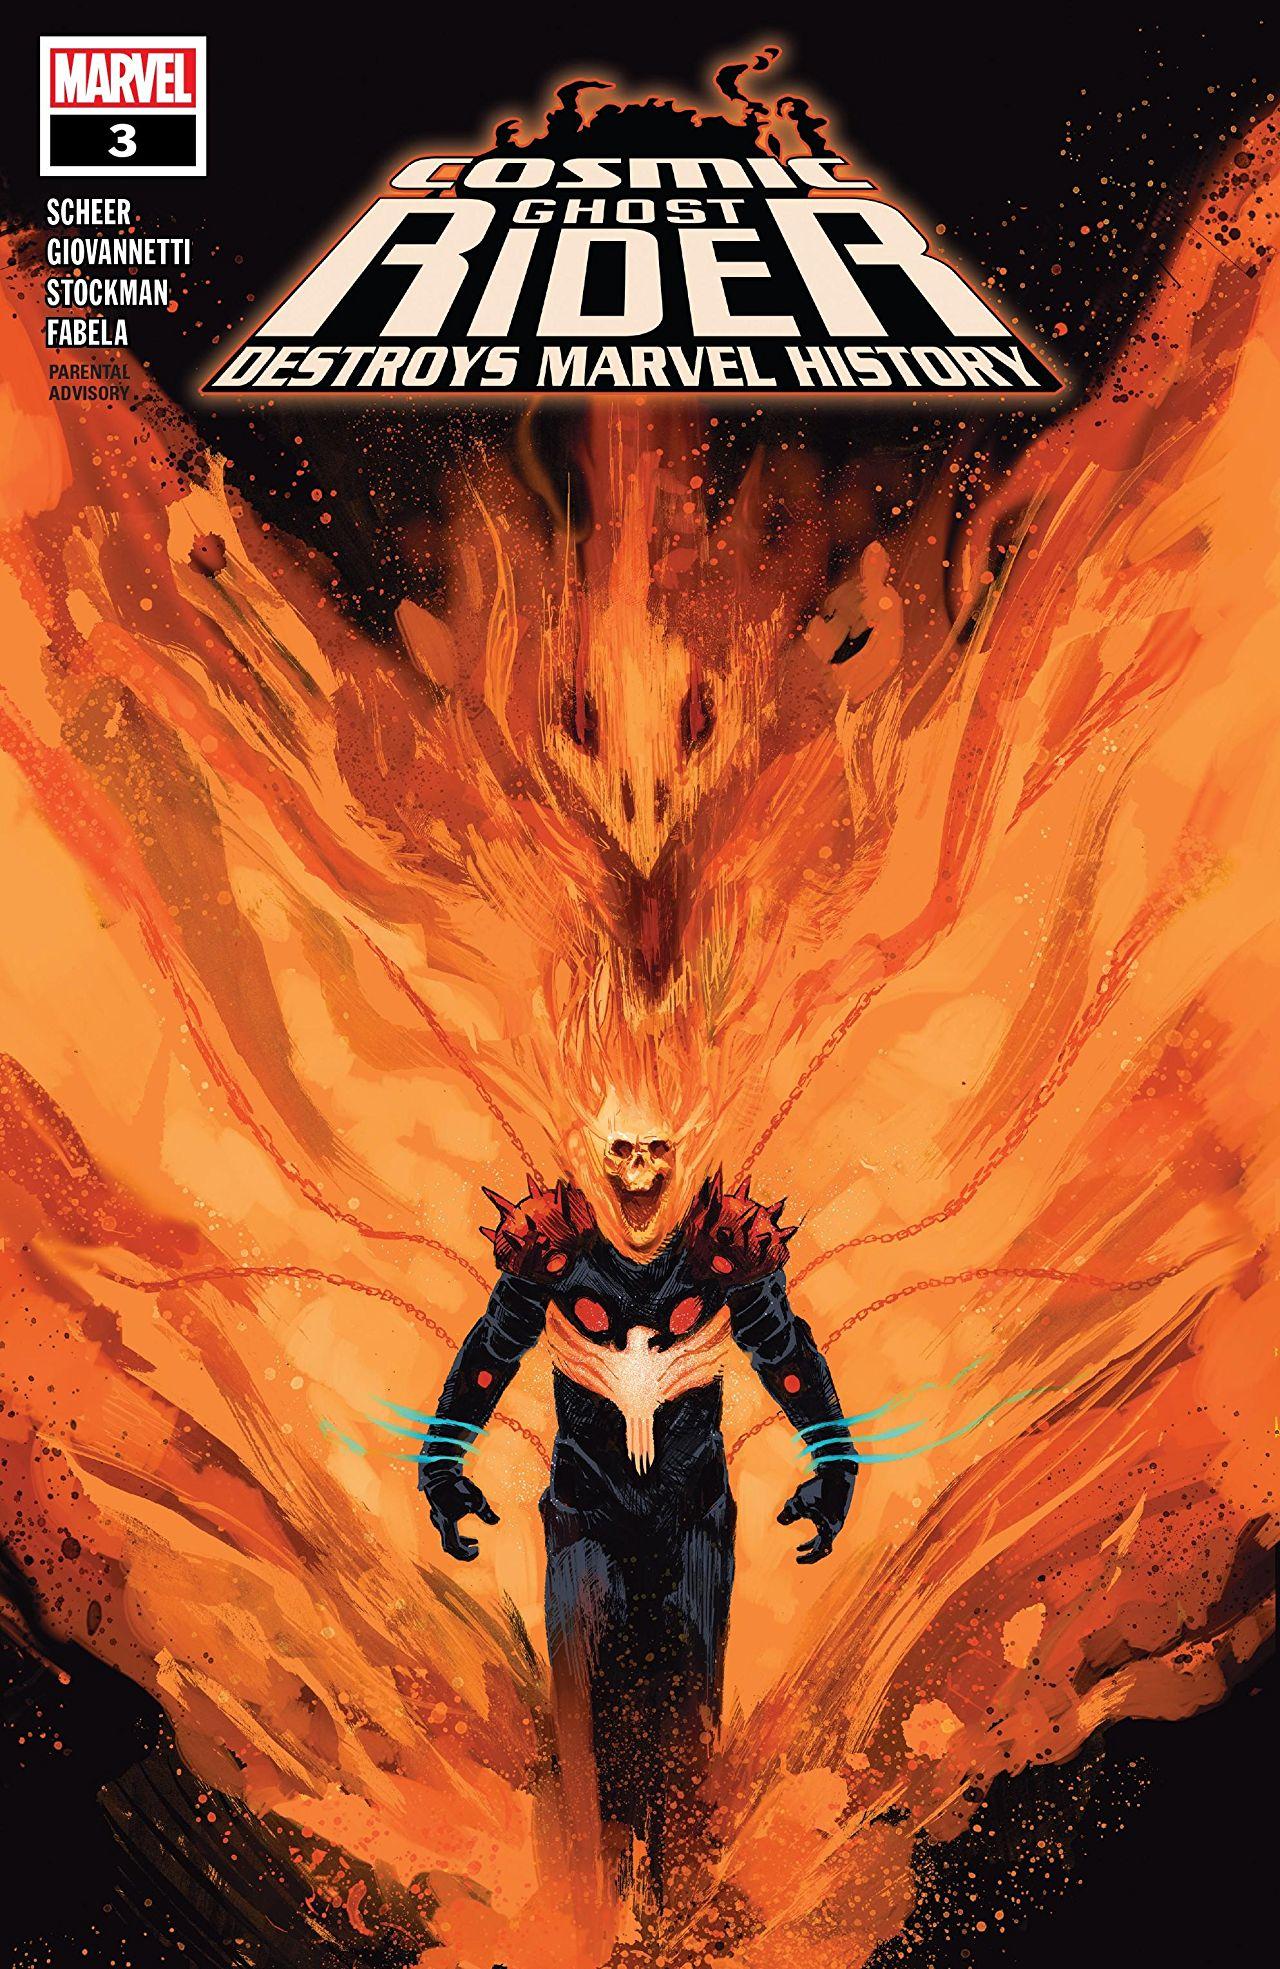 Cosmic Ghost Rider Destroys Marvel History Vol. 1 #3